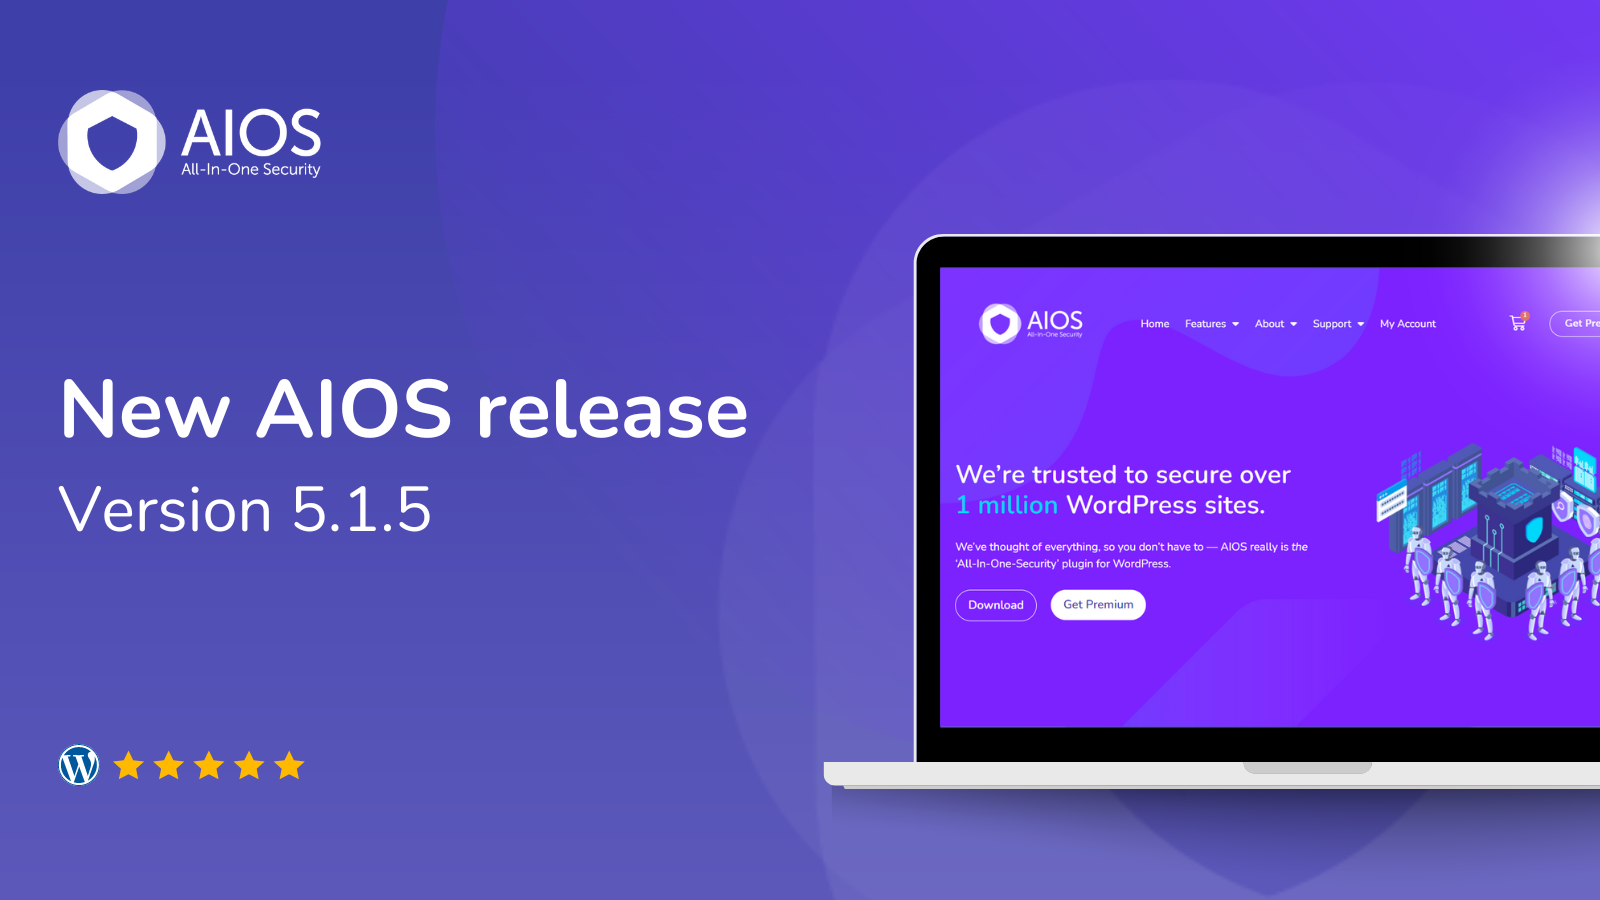 AIOS release Version 5.1.5